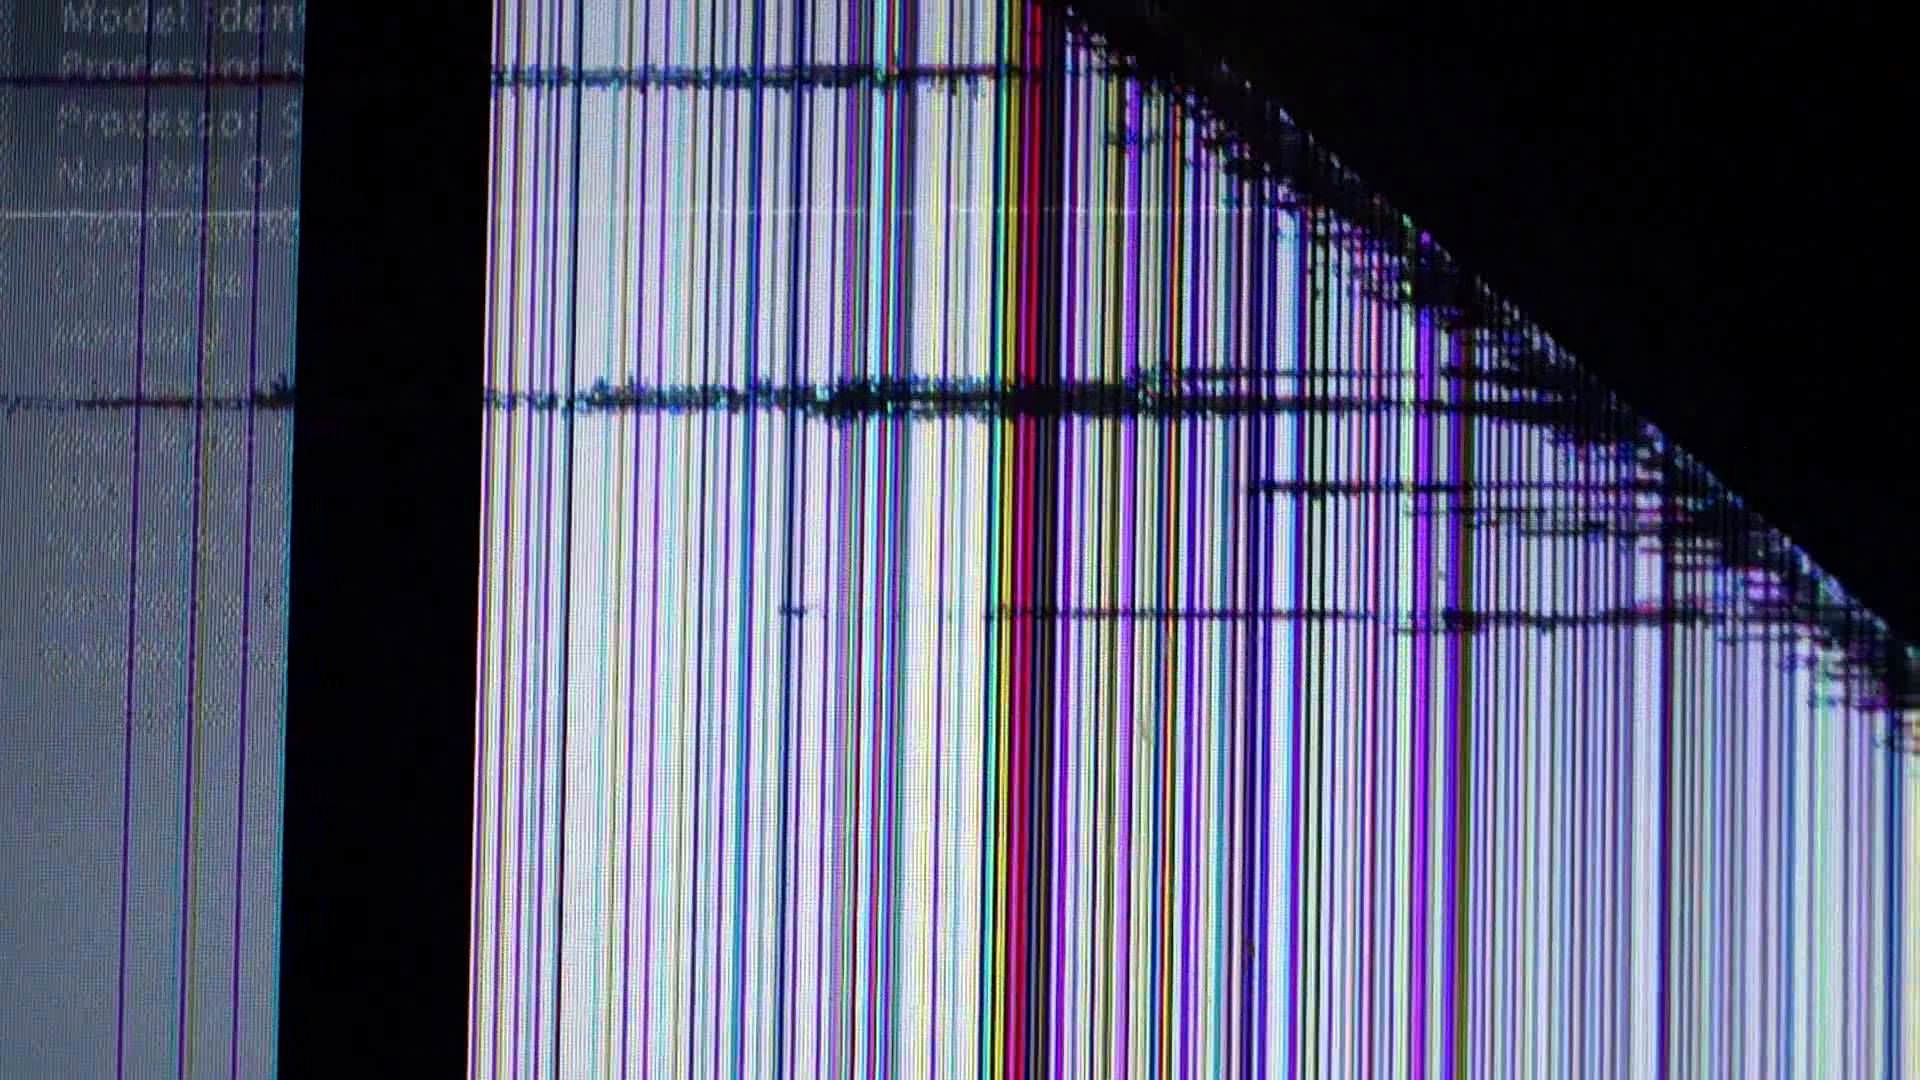 Broken Screen Wallpaper make it look like you screen is broken